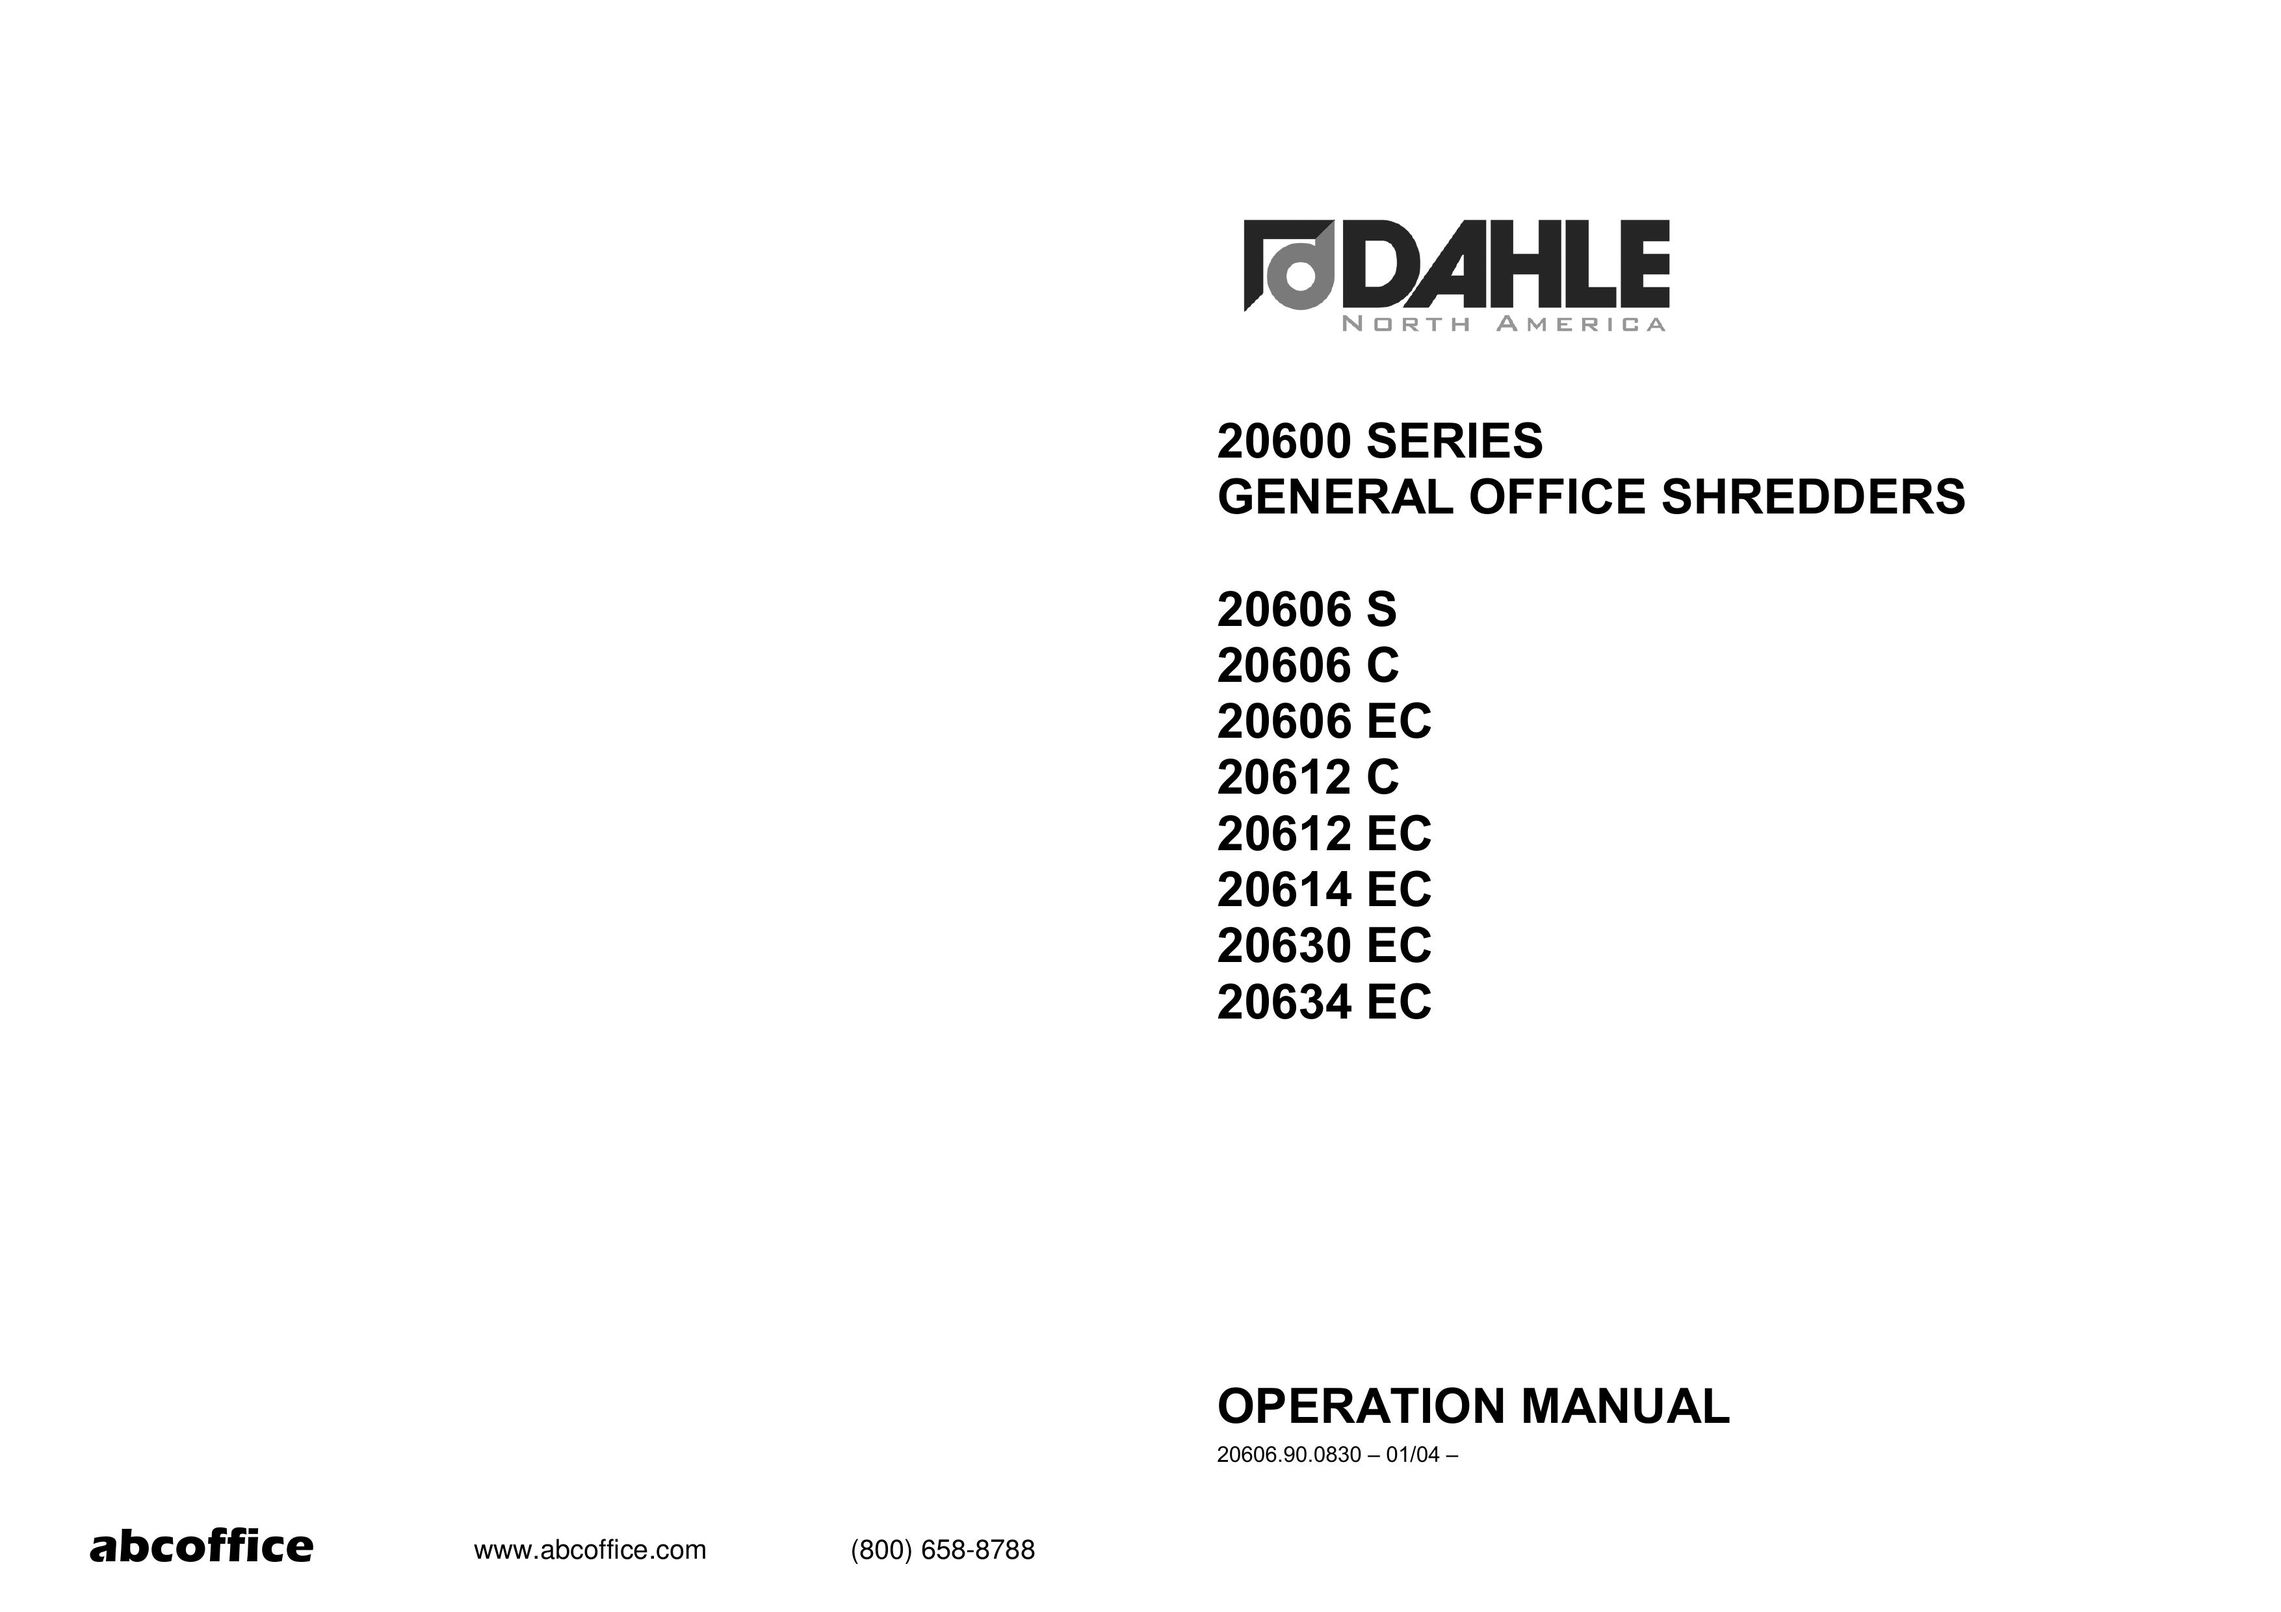 ABC Office 20630 EC Paper Shredder User Manual